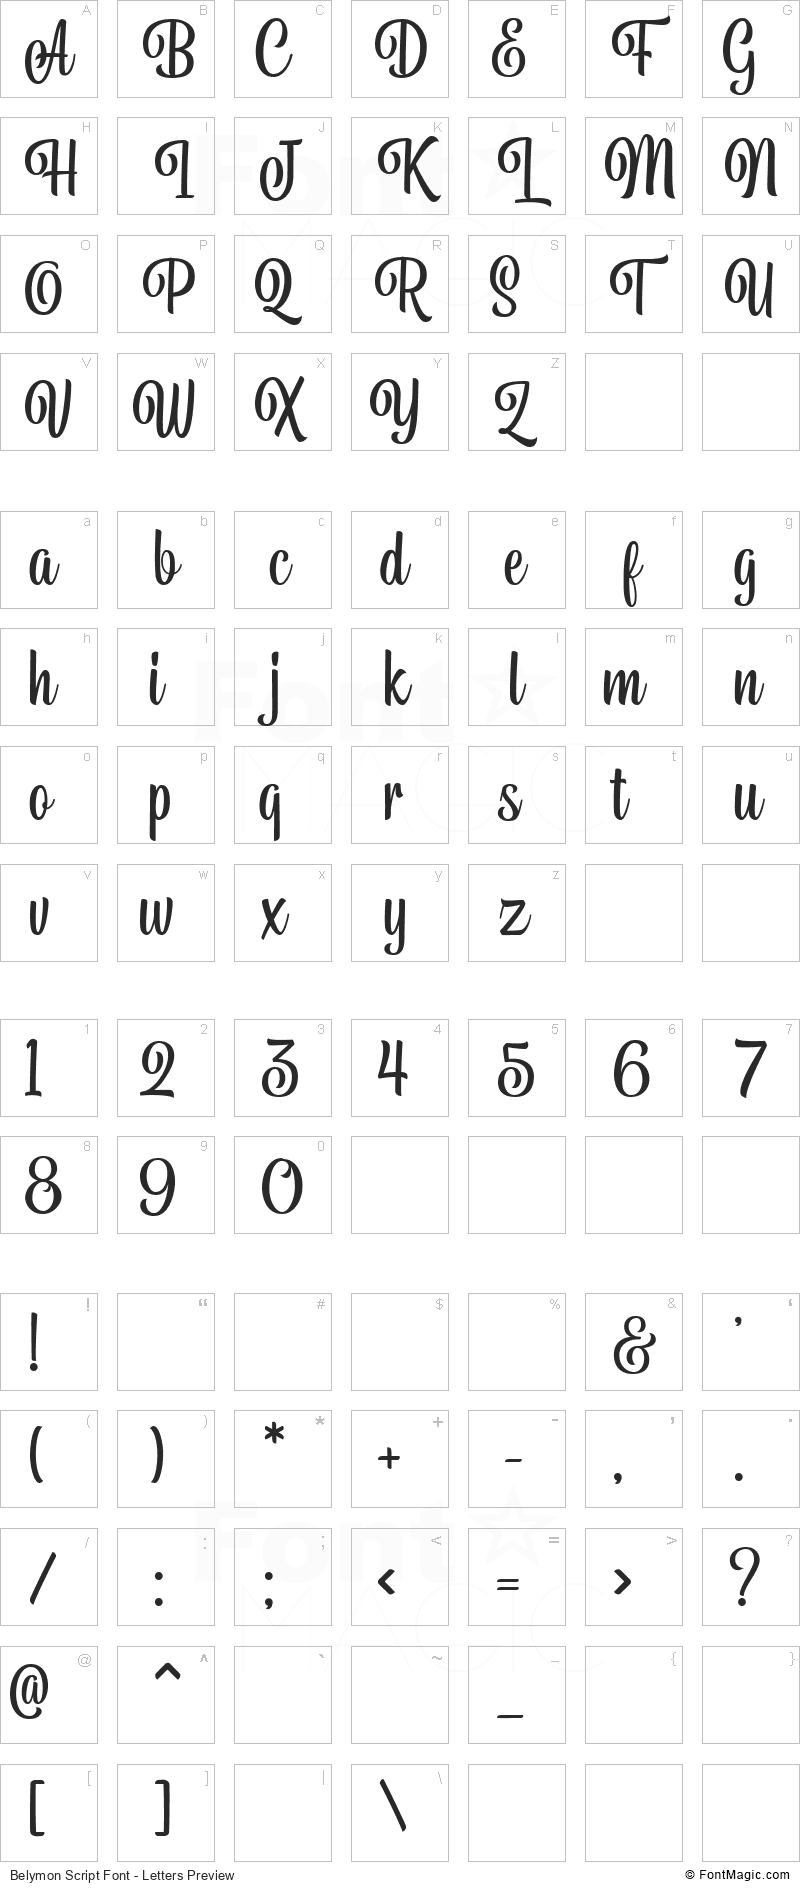 Belymon Script Font - All Latters Preview Chart